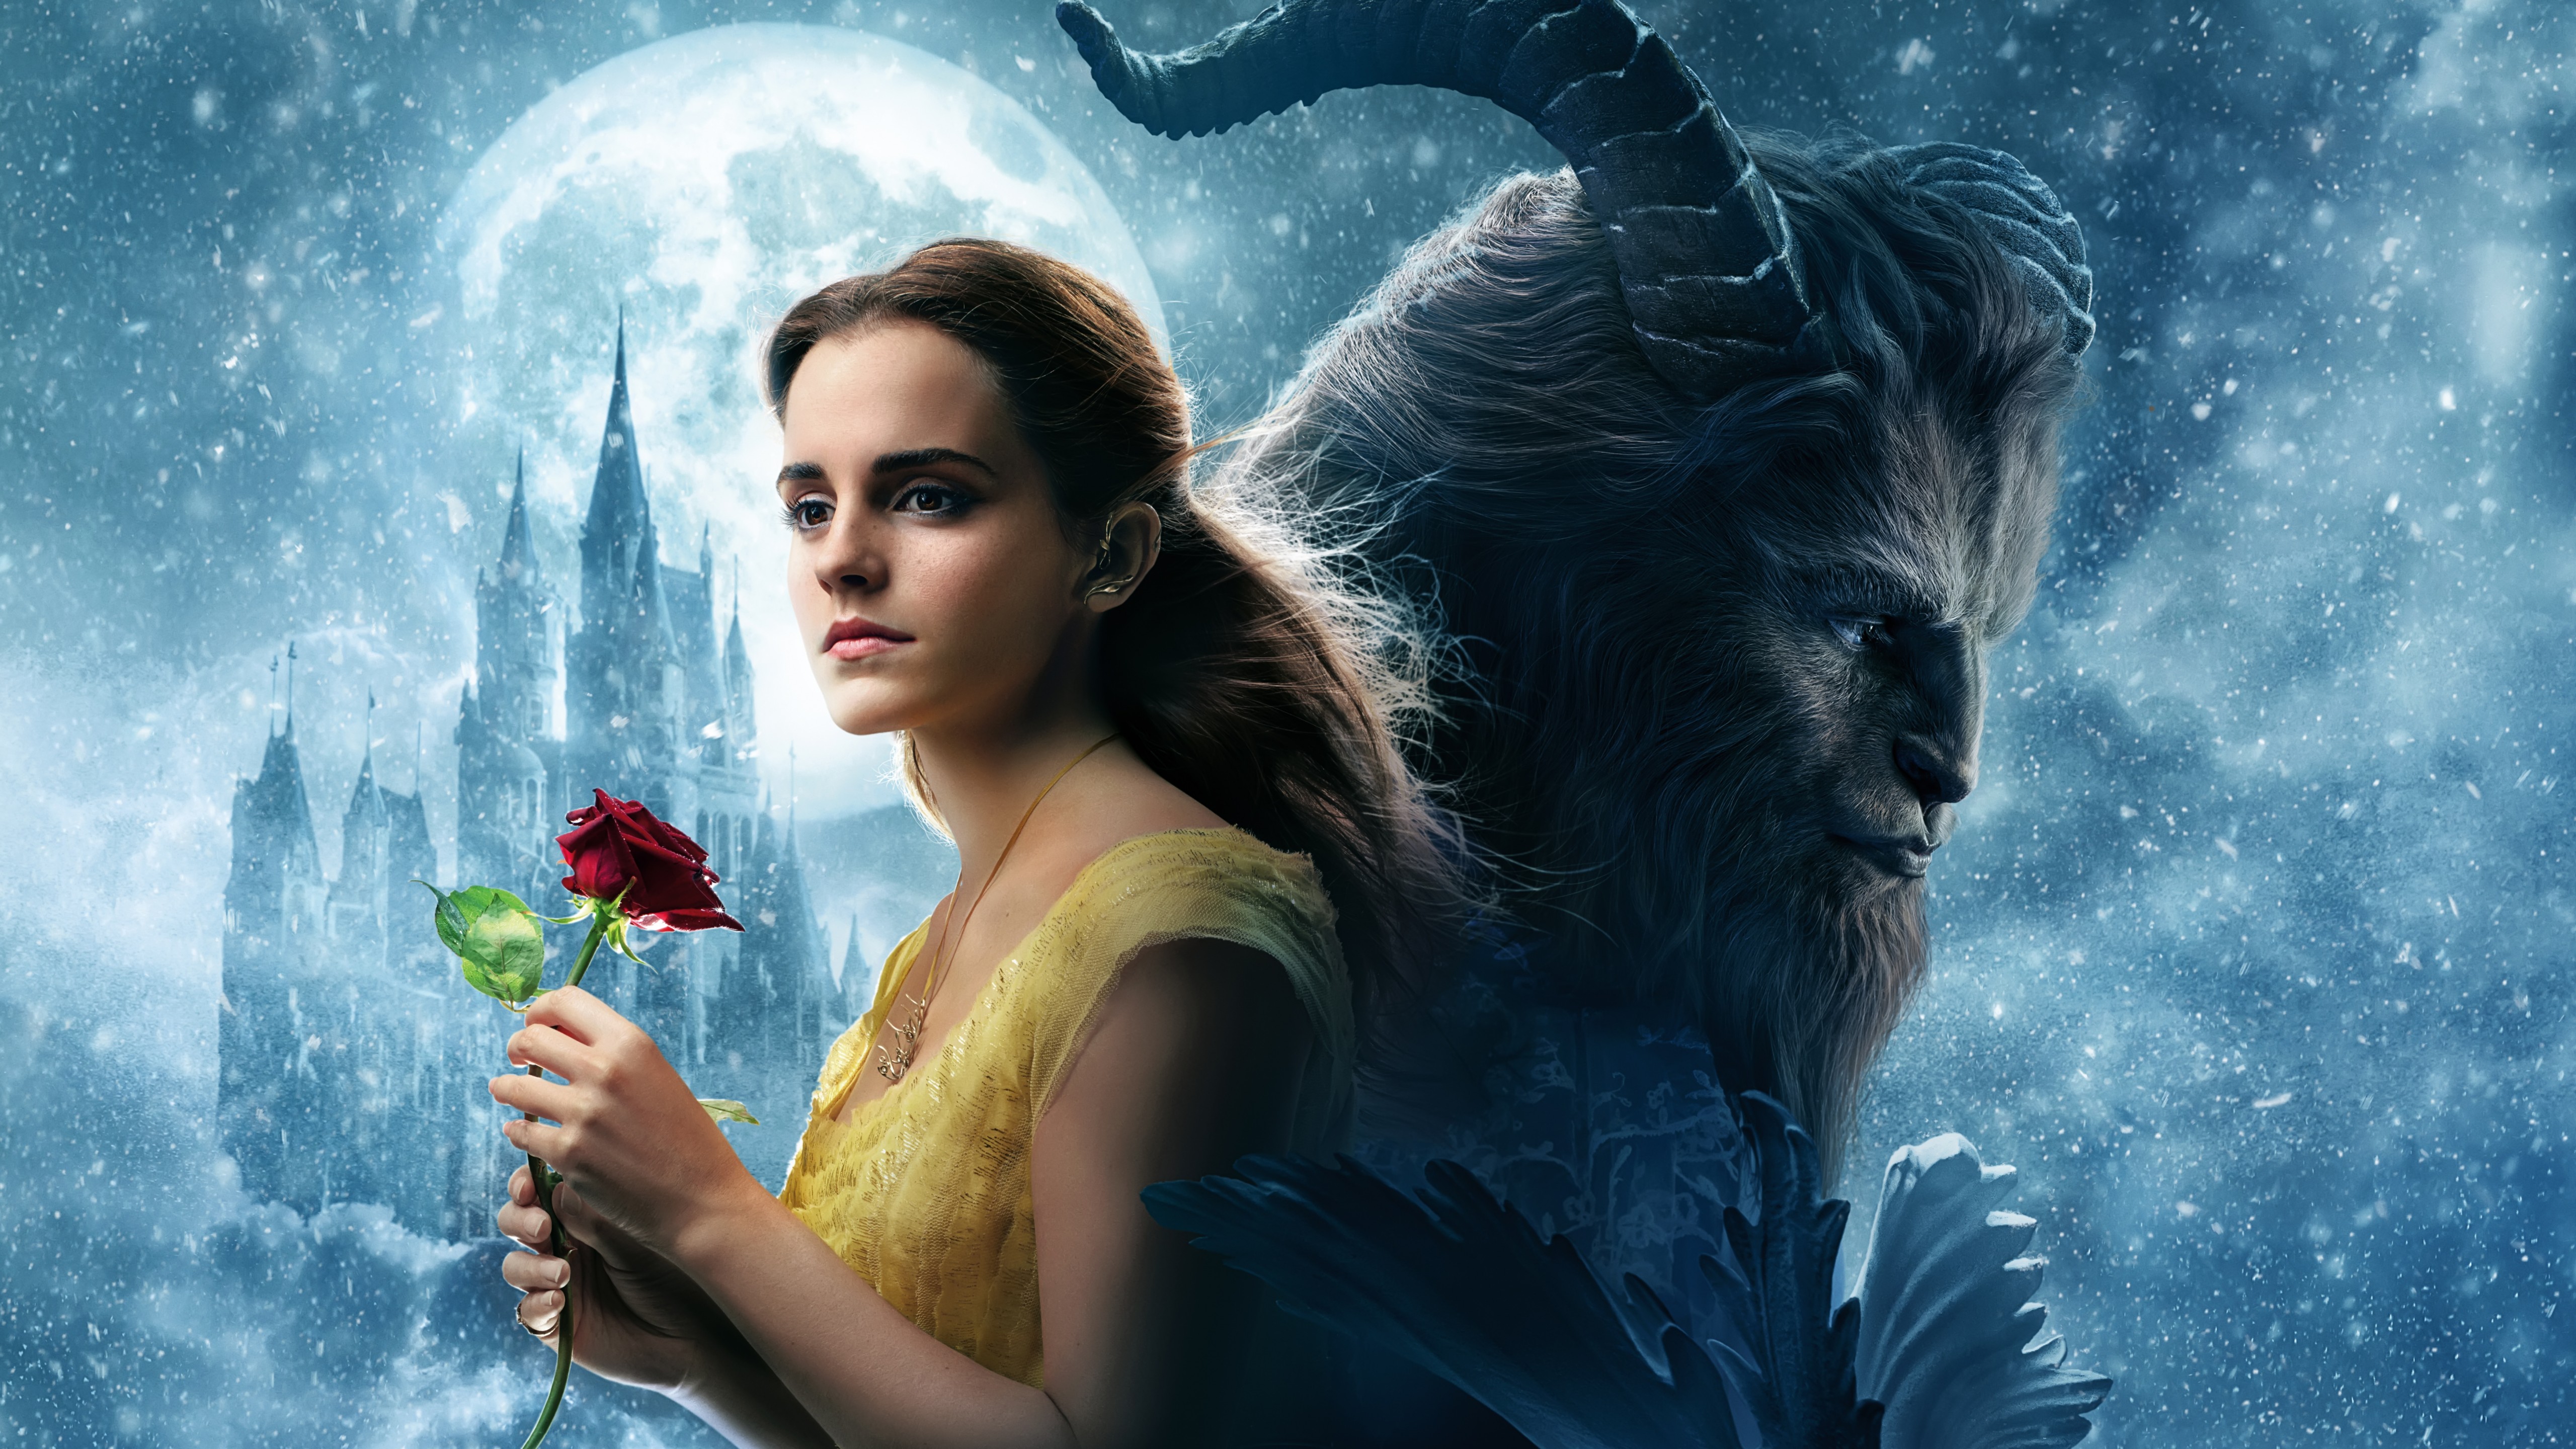 Beauty And The Beast 2017 Dan Stevens Emma Watson 5120x2880